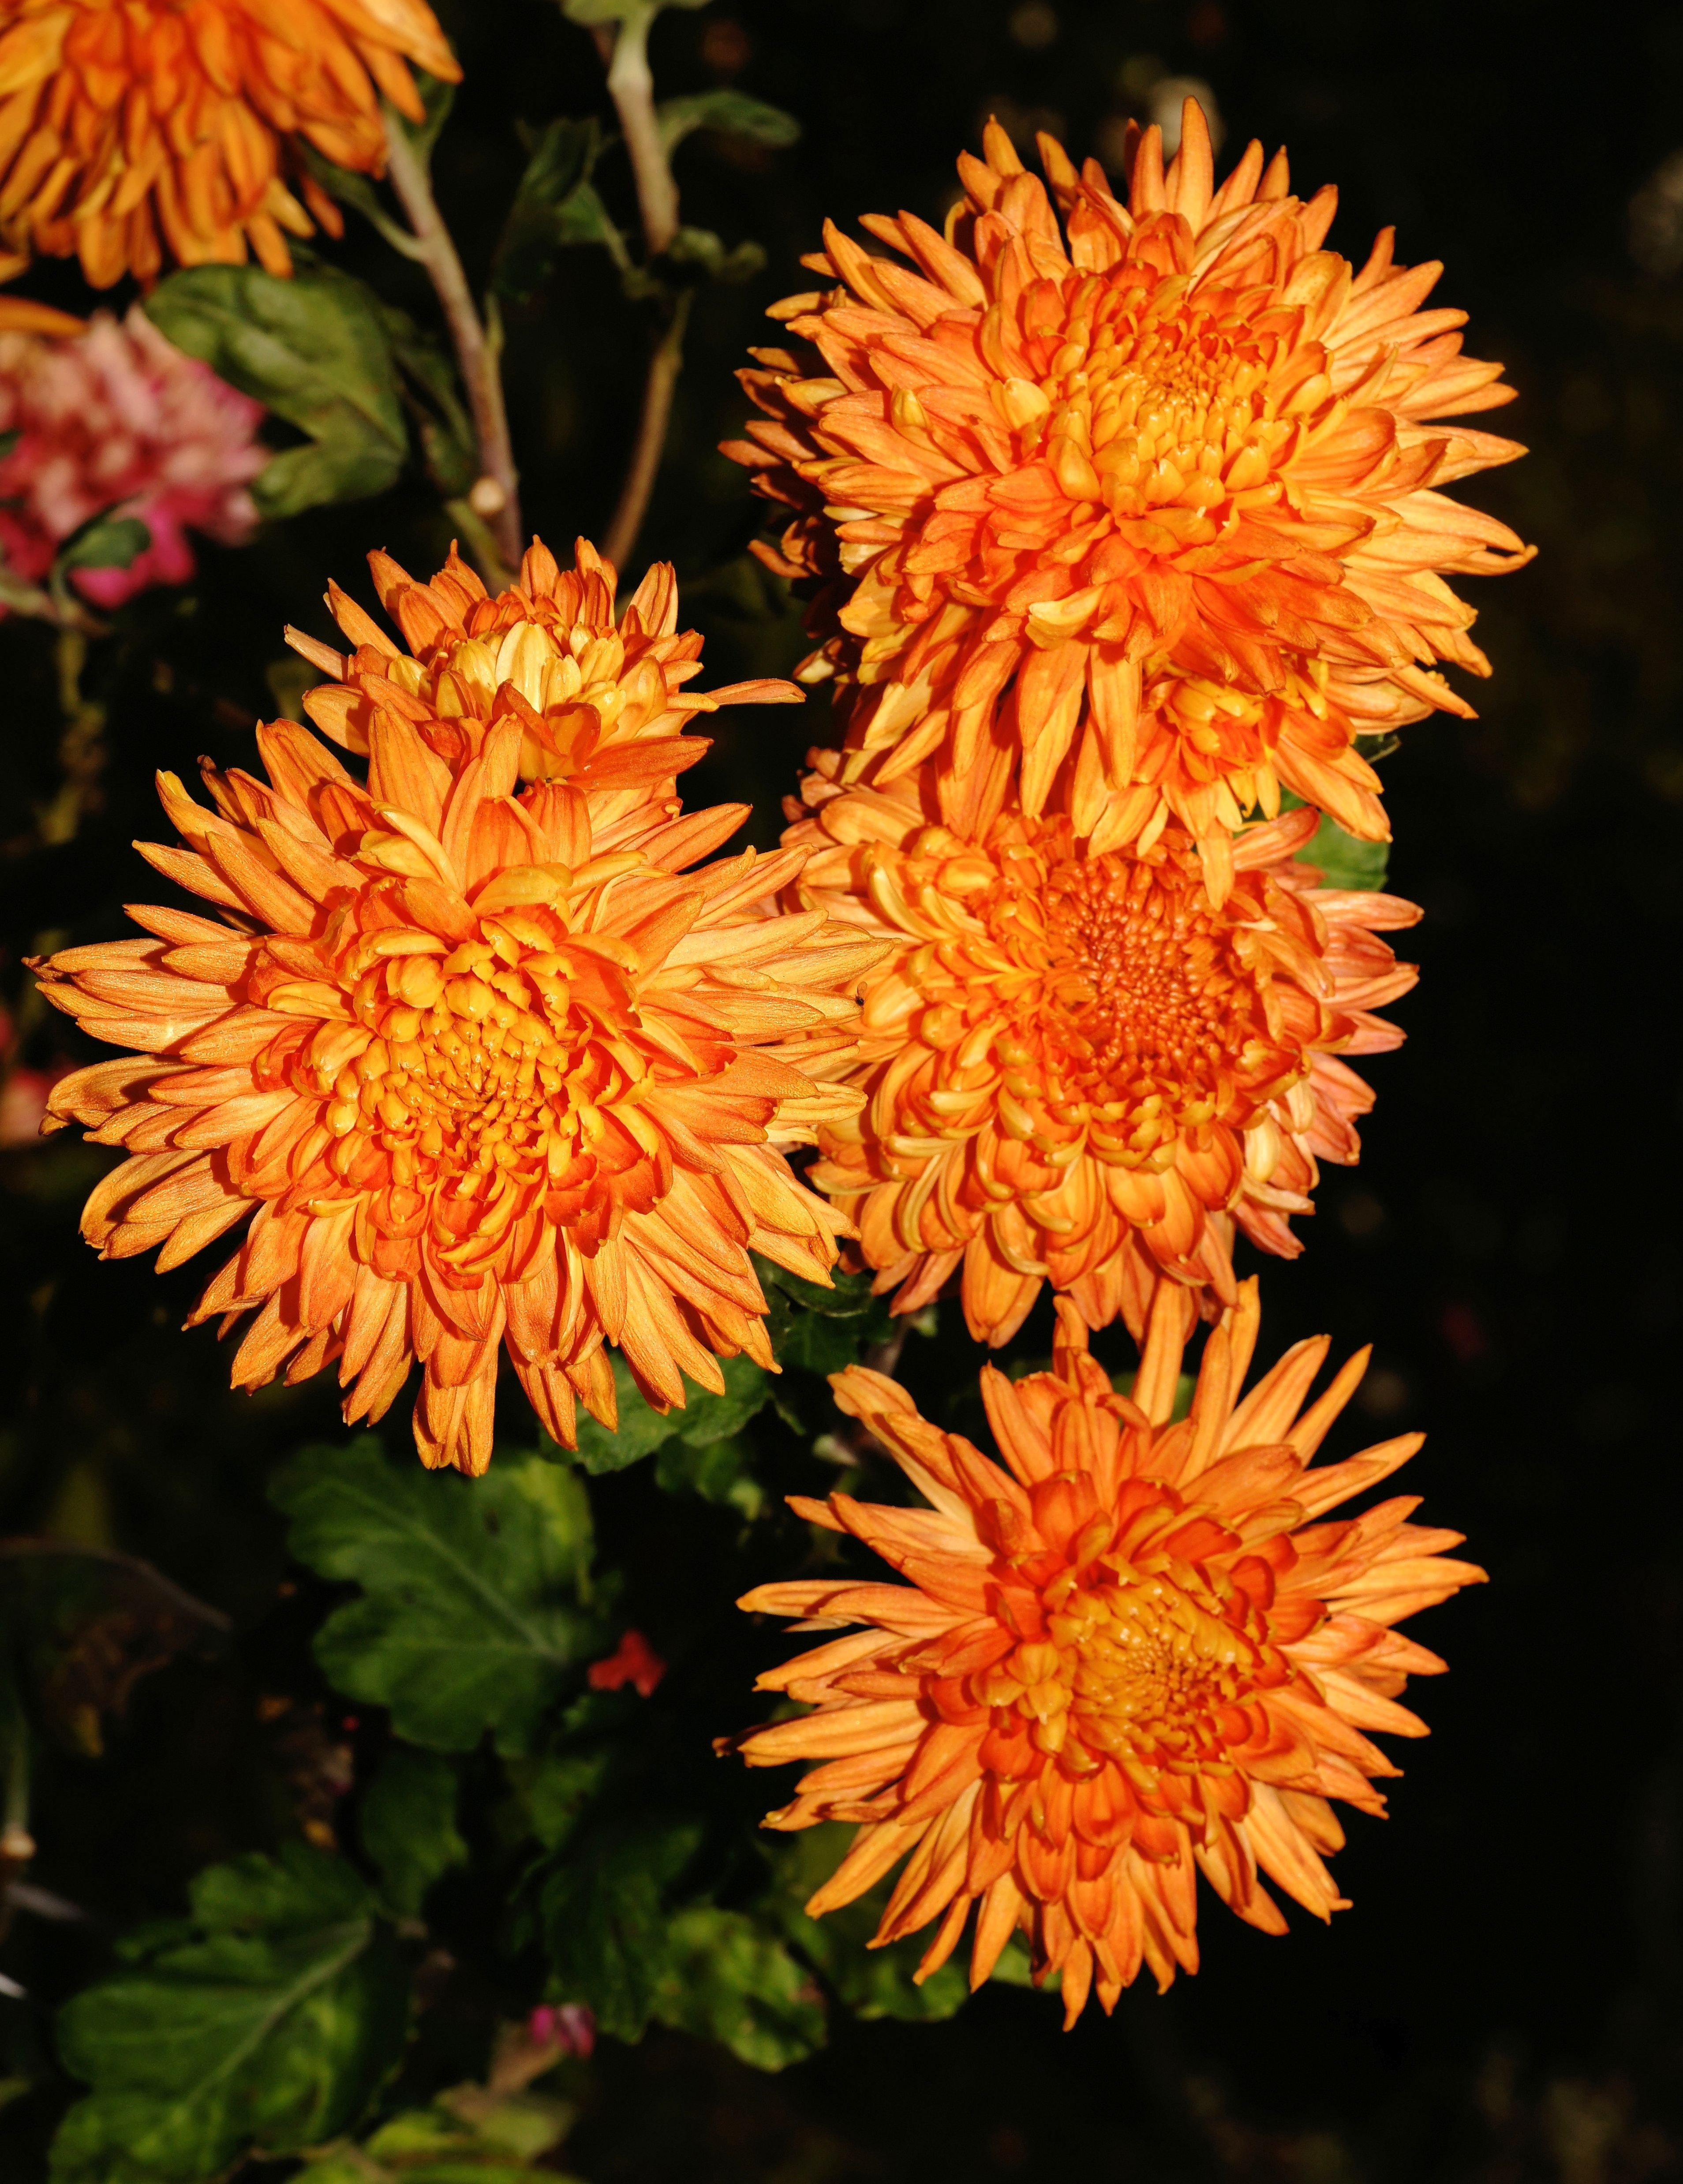 orange flowers lot